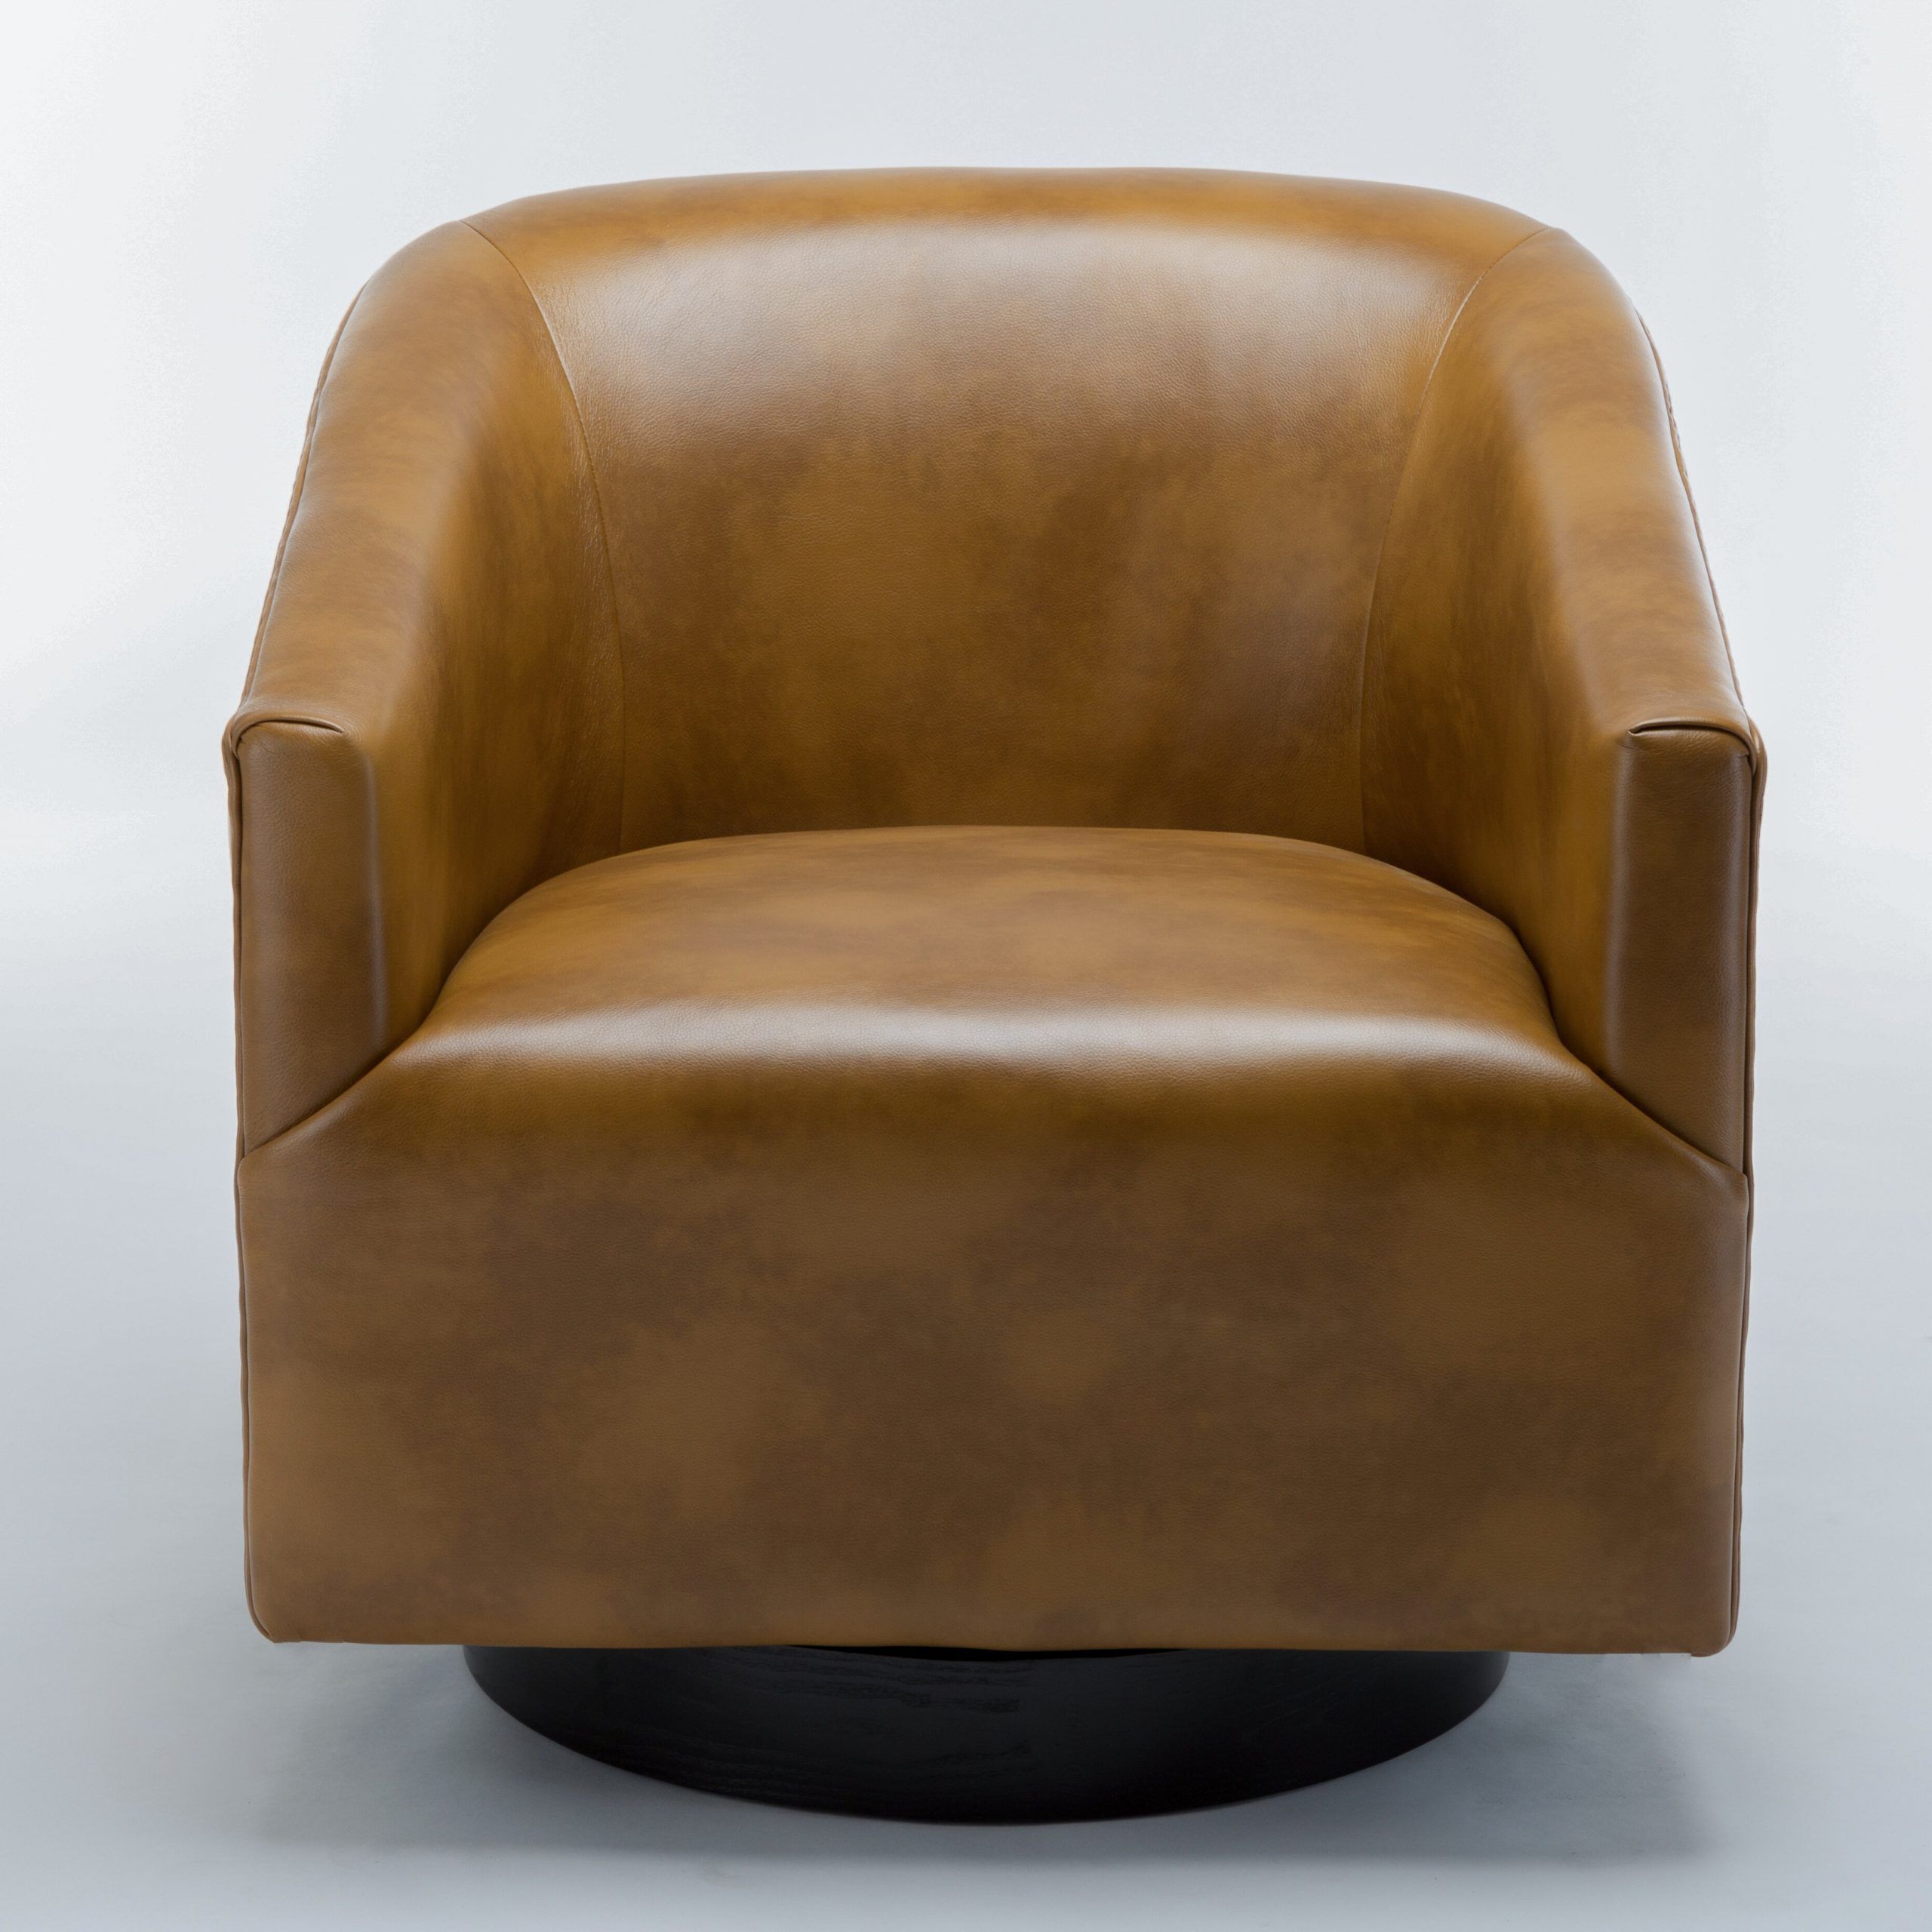 Mcintyre 30" W Faux Leather Swivel Barrel Chair For Faux Leather Barrel Chair And Ottoman Sets (View 15 of 15)